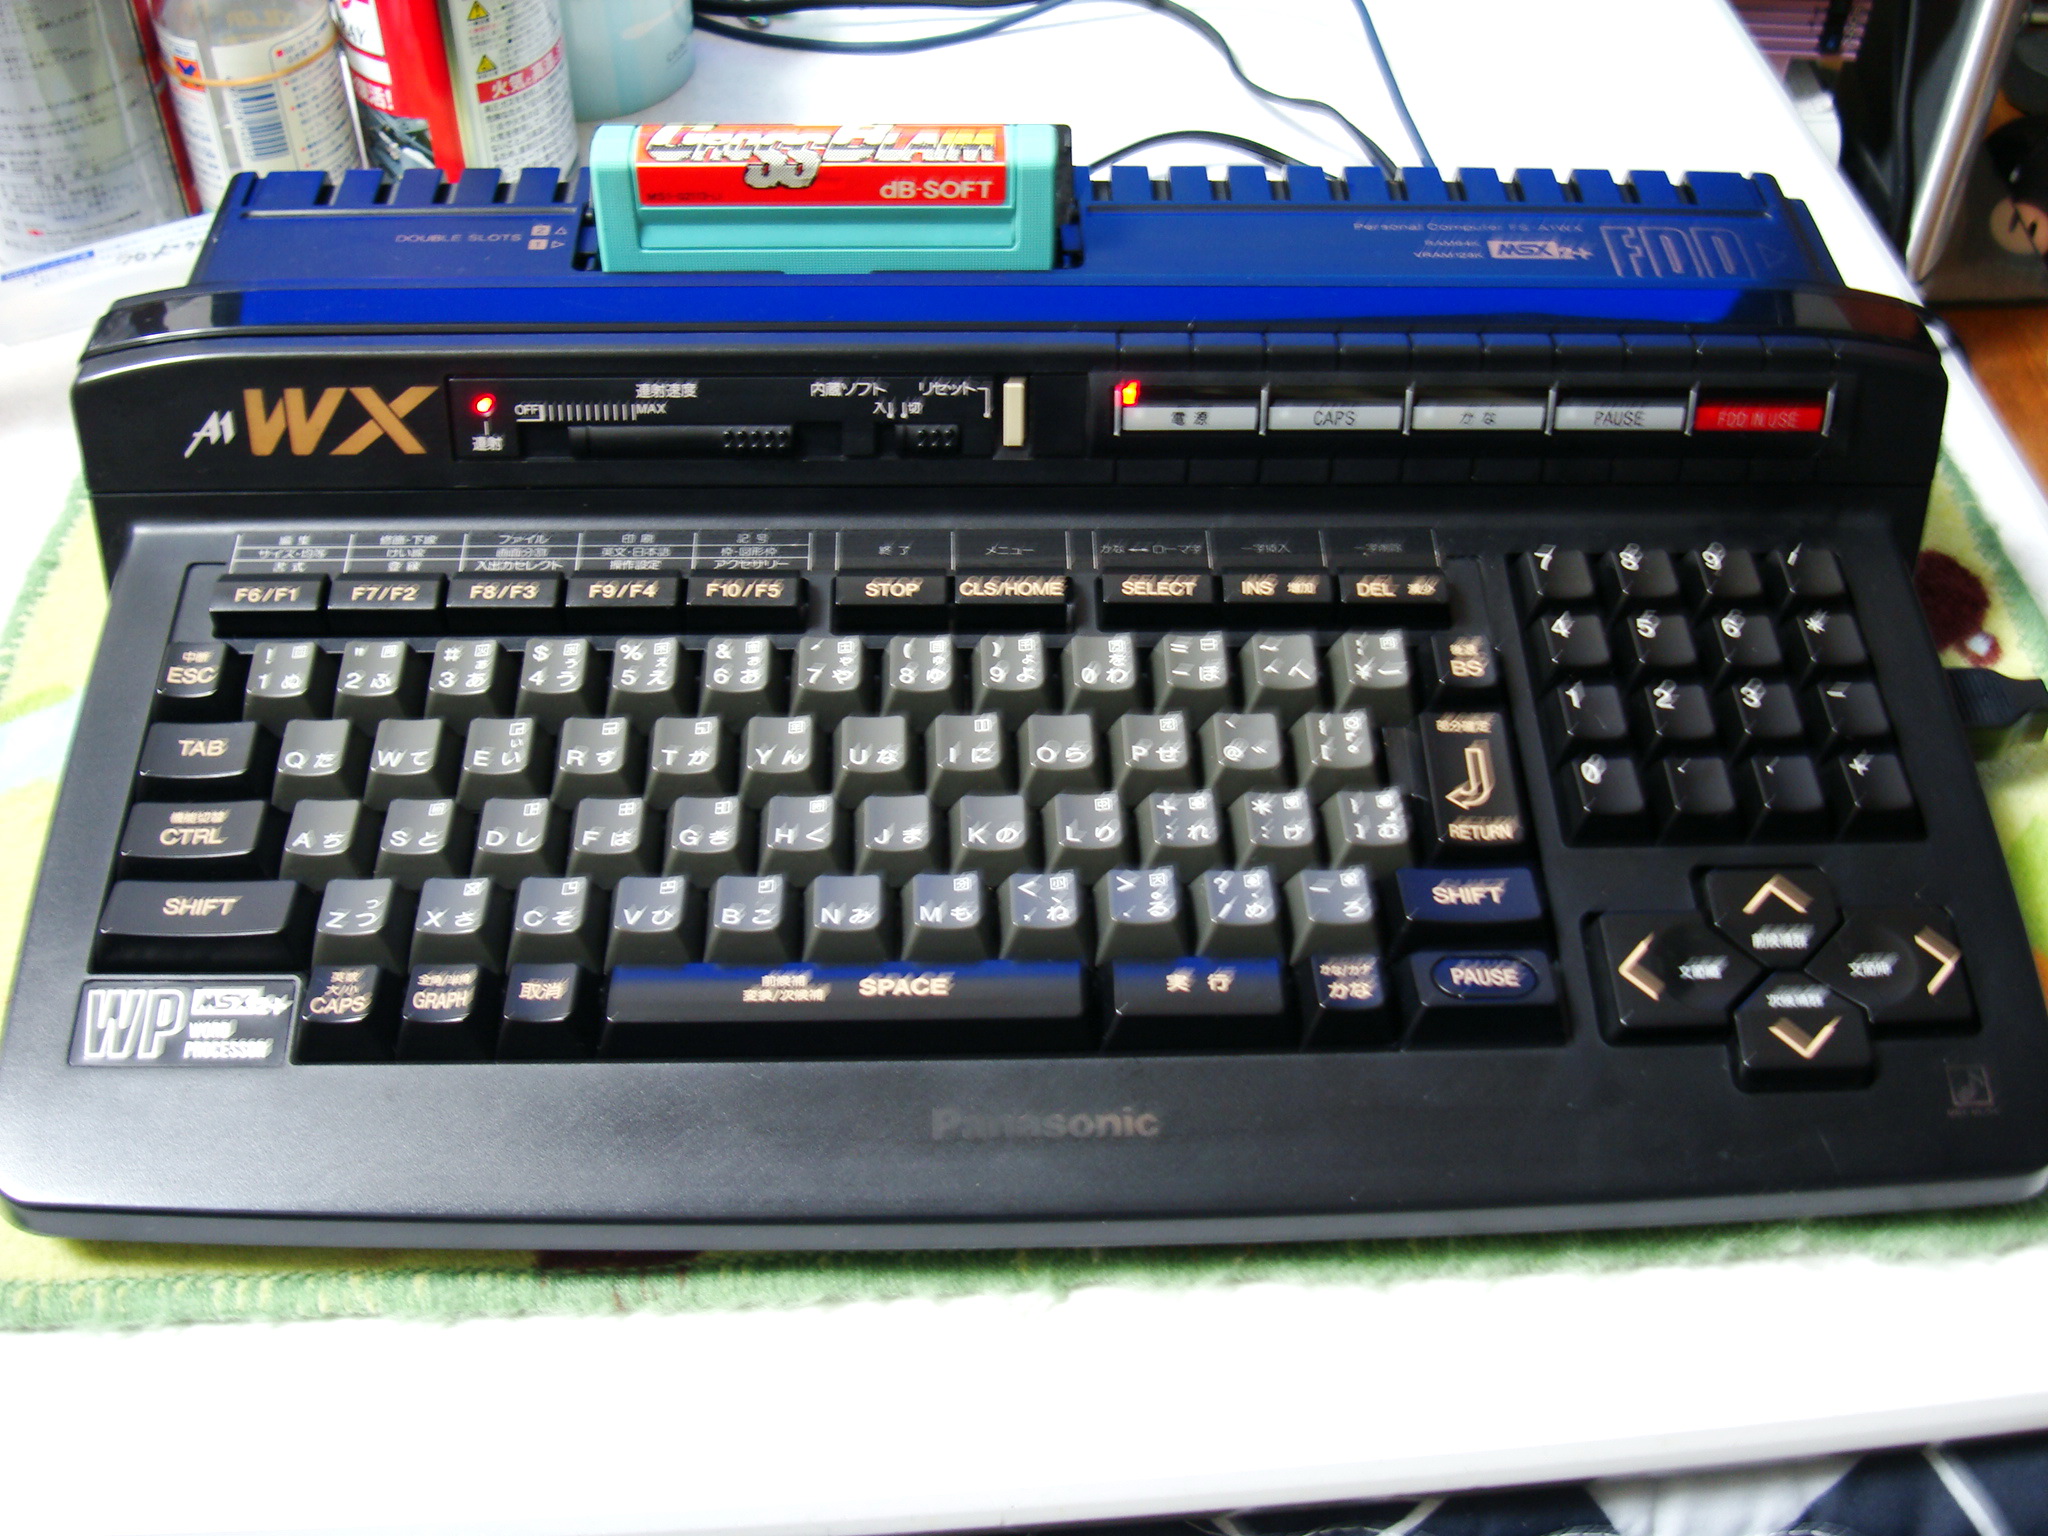 Panasonic FS-A1WX 整備済 - デスクトップ型PC